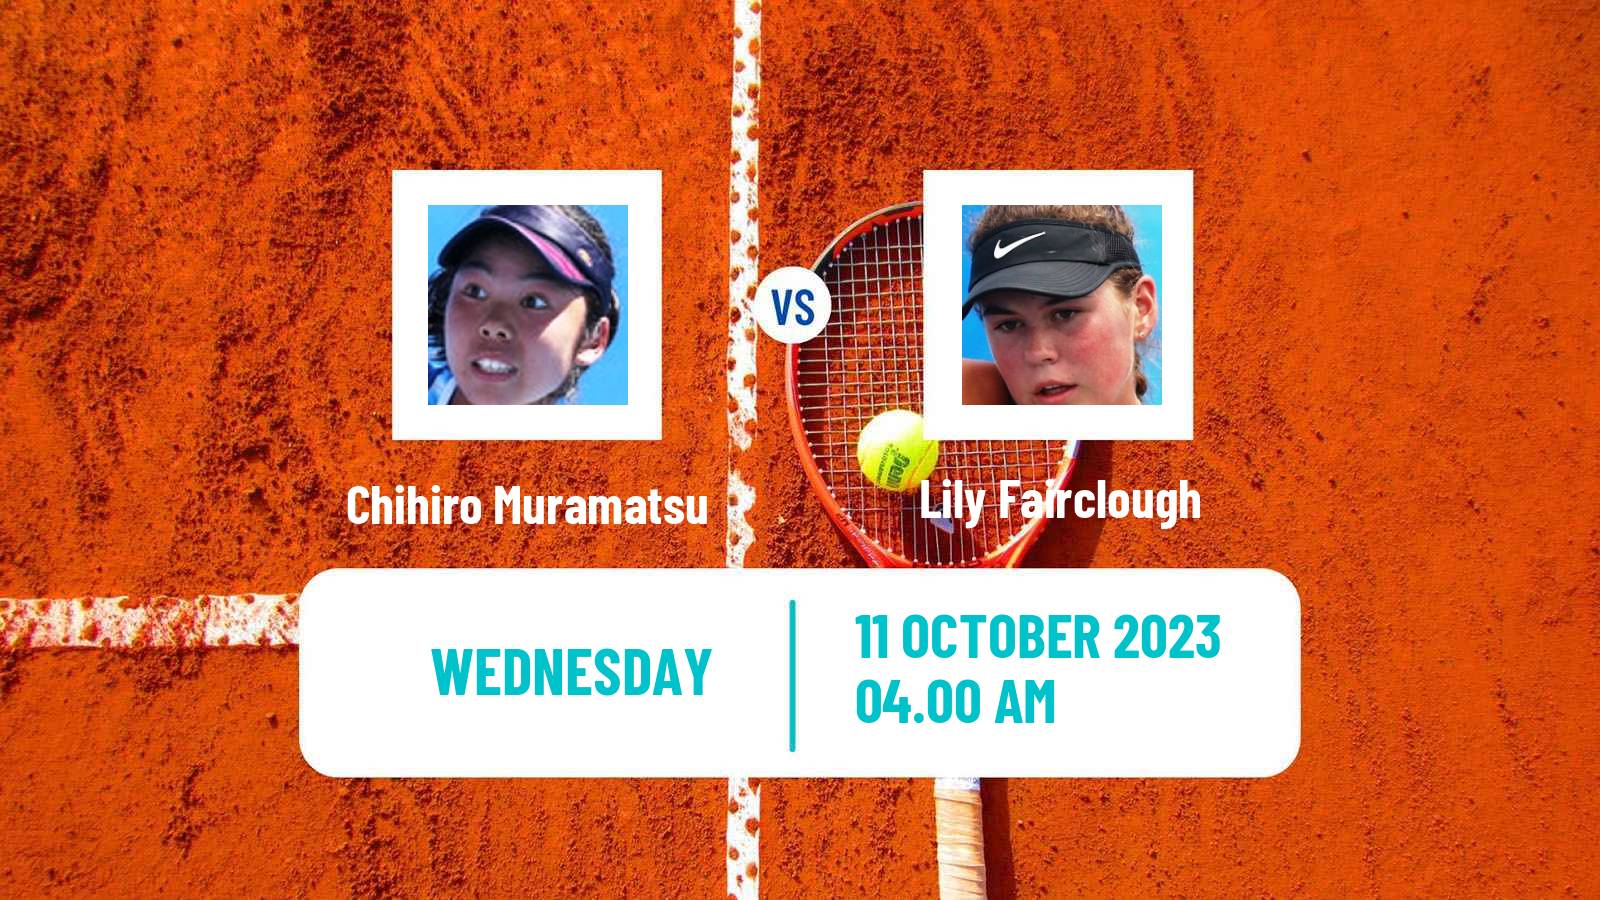 Tennis ITF W25 Cairns 2 Women Chihiro Muramatsu - Lily Fairclough